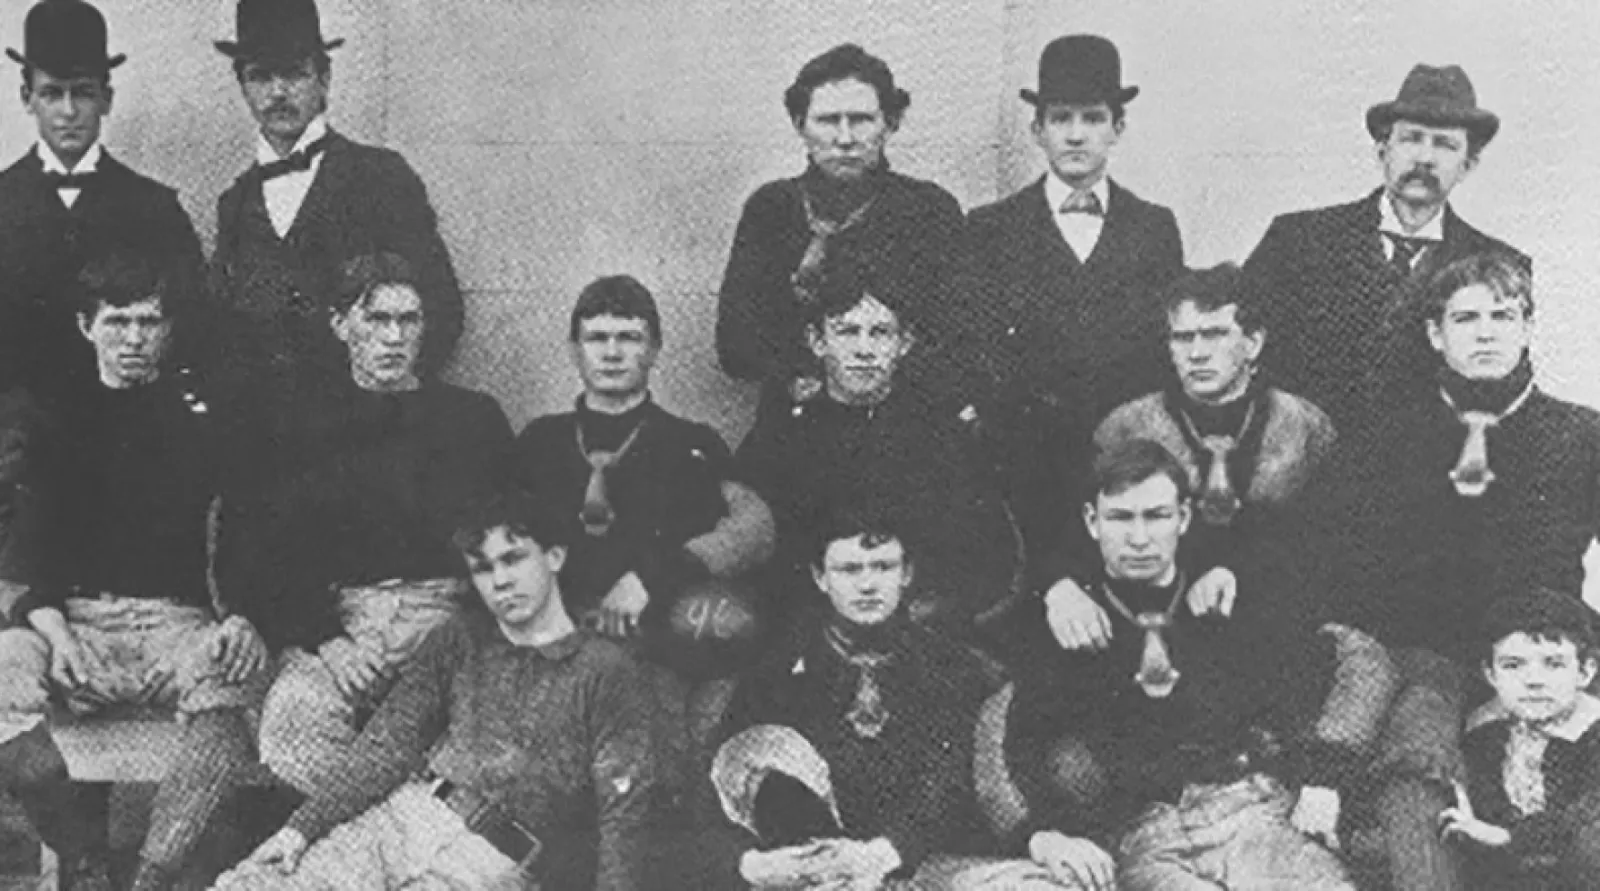 University of South Carolina Football Team of 1896